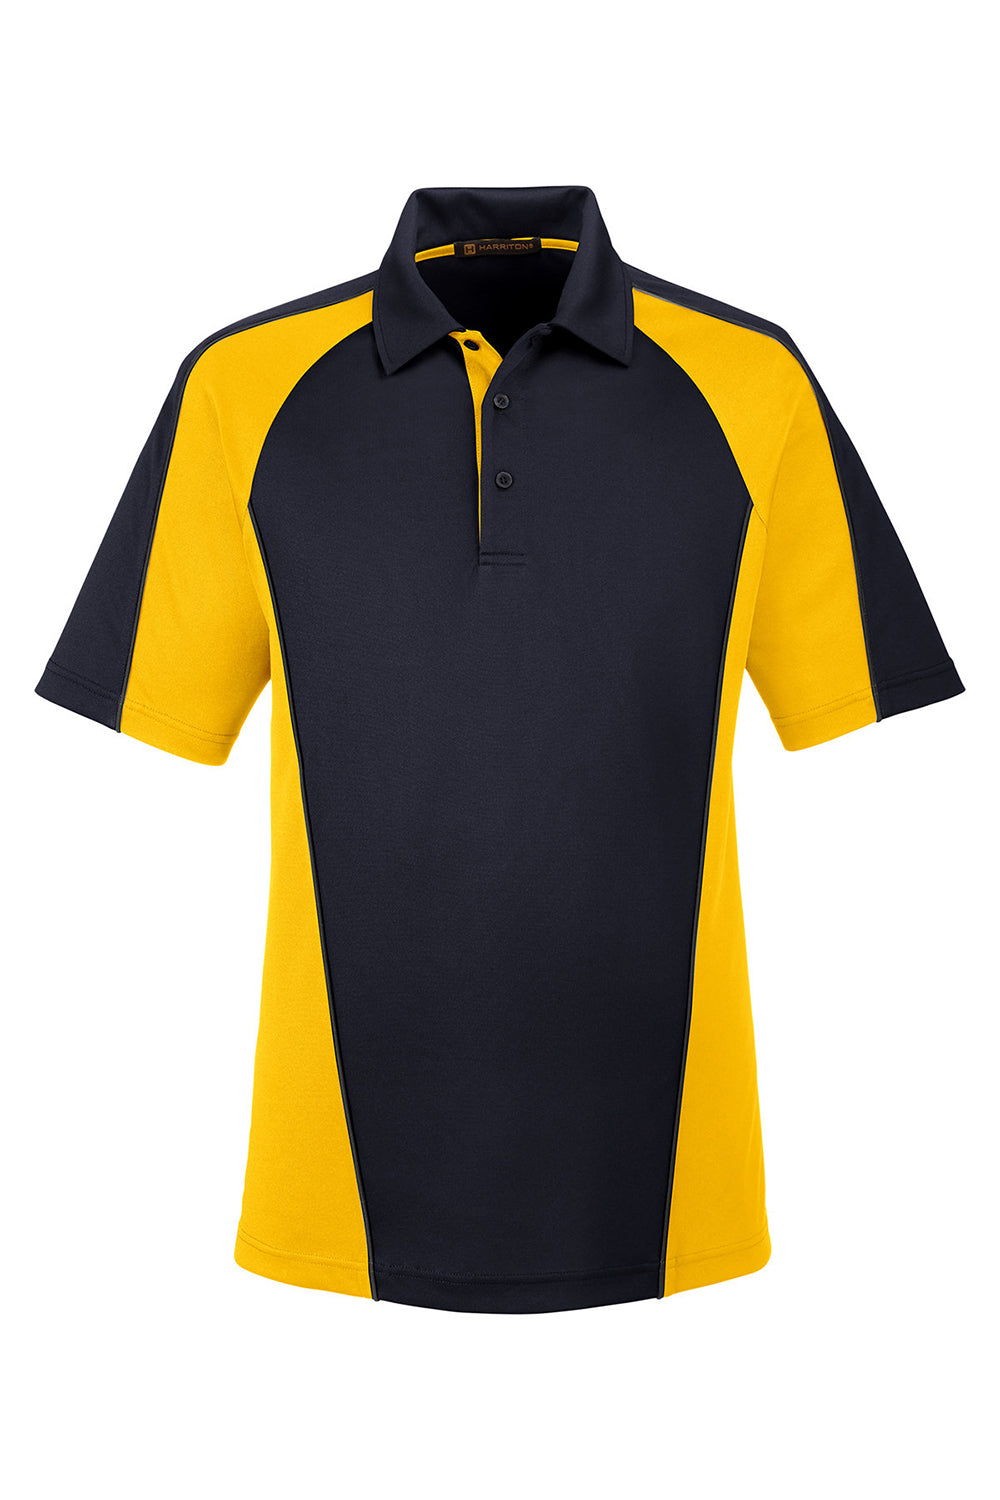 Harriton M385 Mens Advantage Performance Moisture Wicking Colorblock Short Sleeve Polo Shirt Black/Sunray Yellow Flat Front